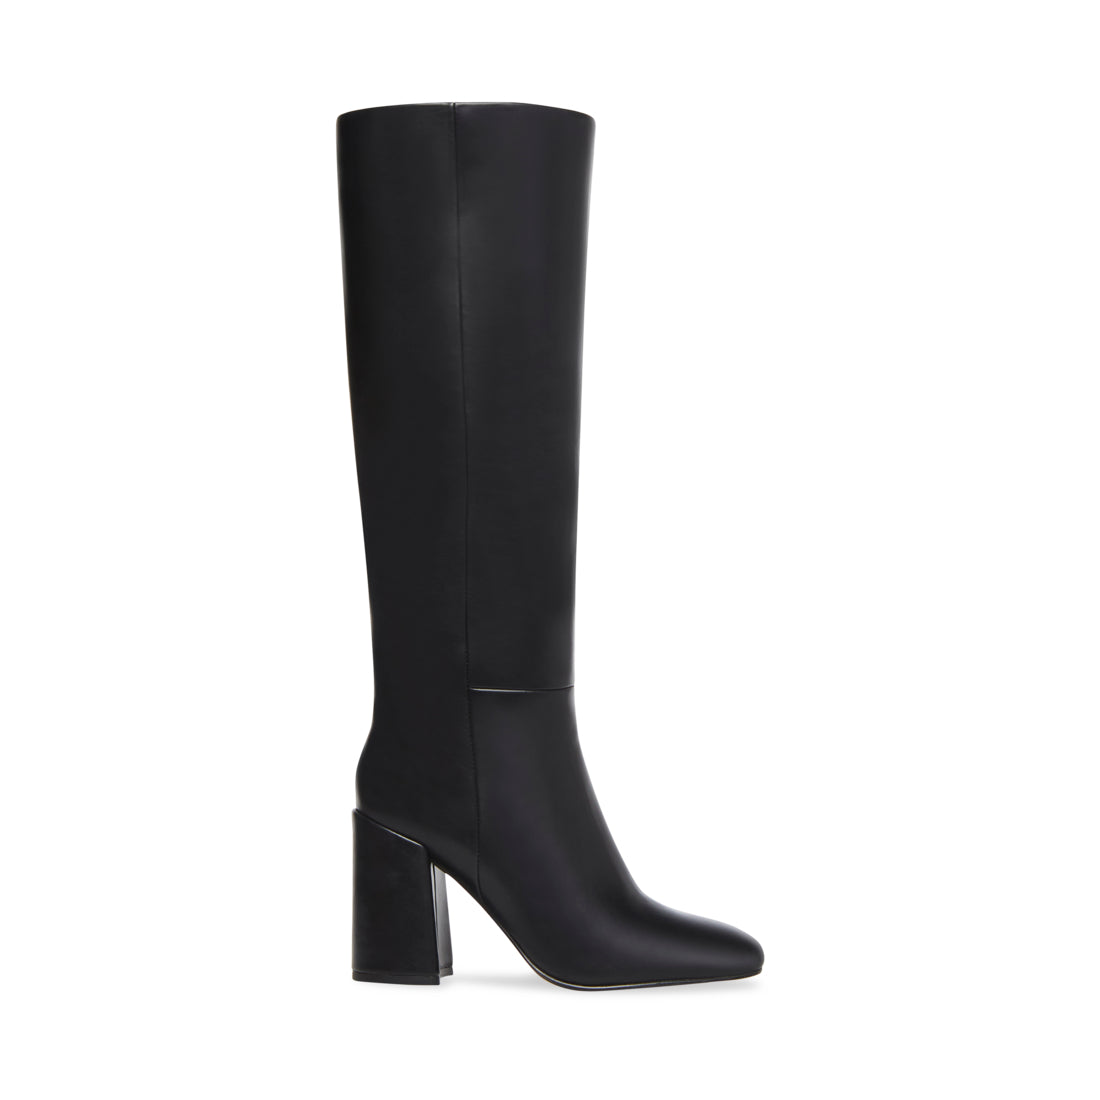 WILLIAM Black Knee High Boots | Women's Designer Boots – Steve Madden ...